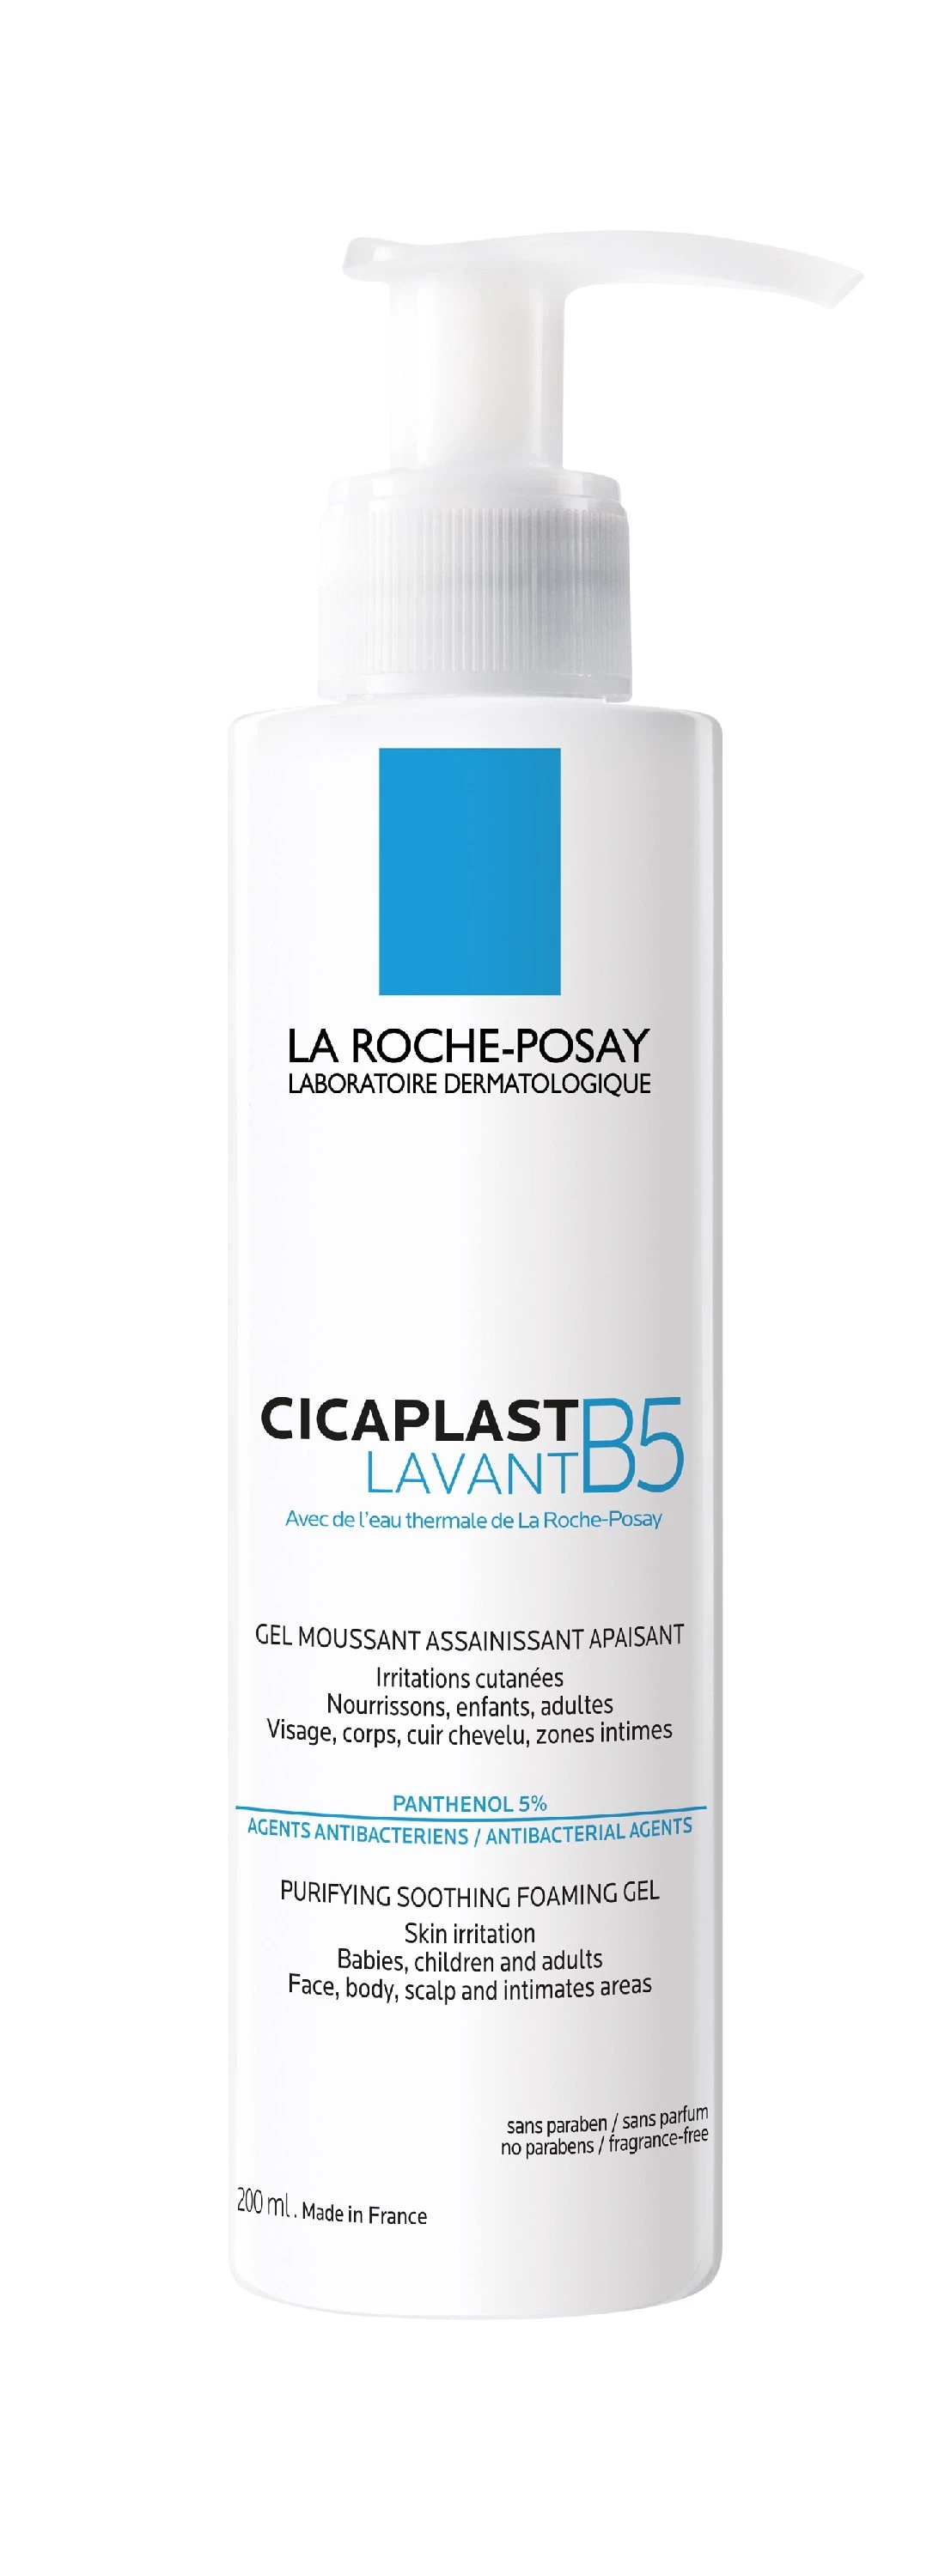 La Roche-Posay Cicaplast Lavant B5, 200ml.